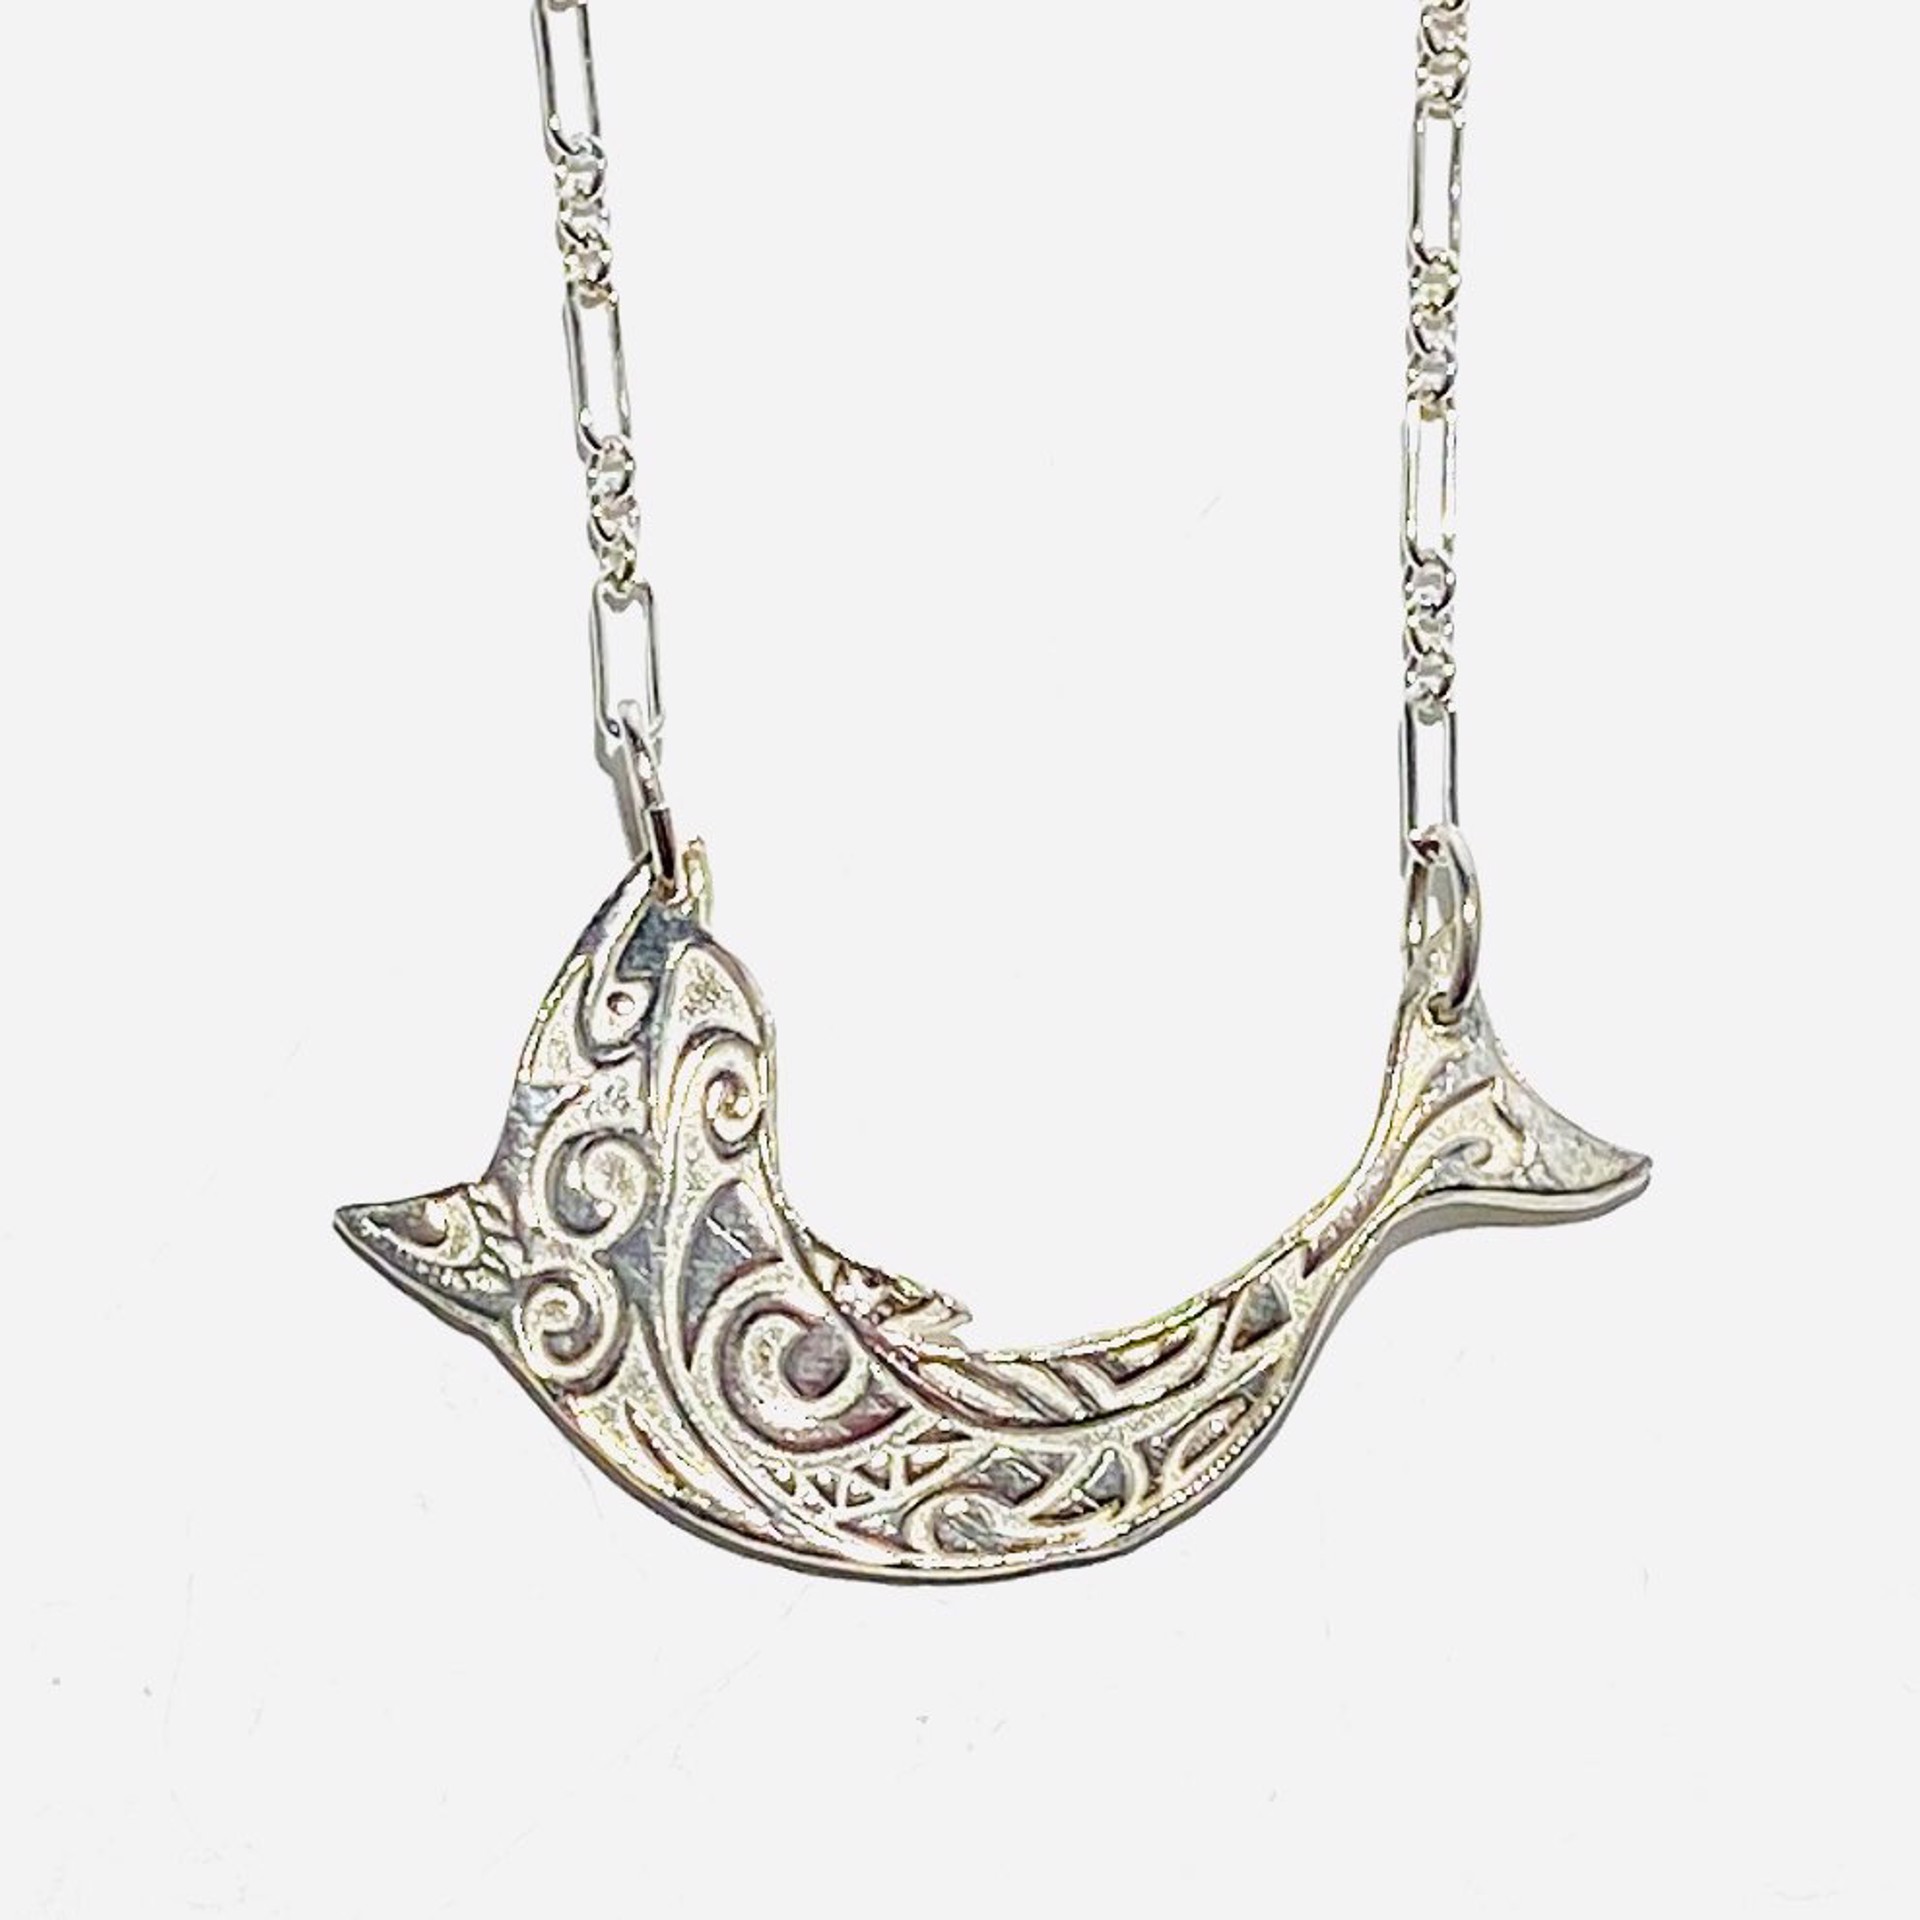 Dolphin Necklace KH23-9 by Karen Hakim